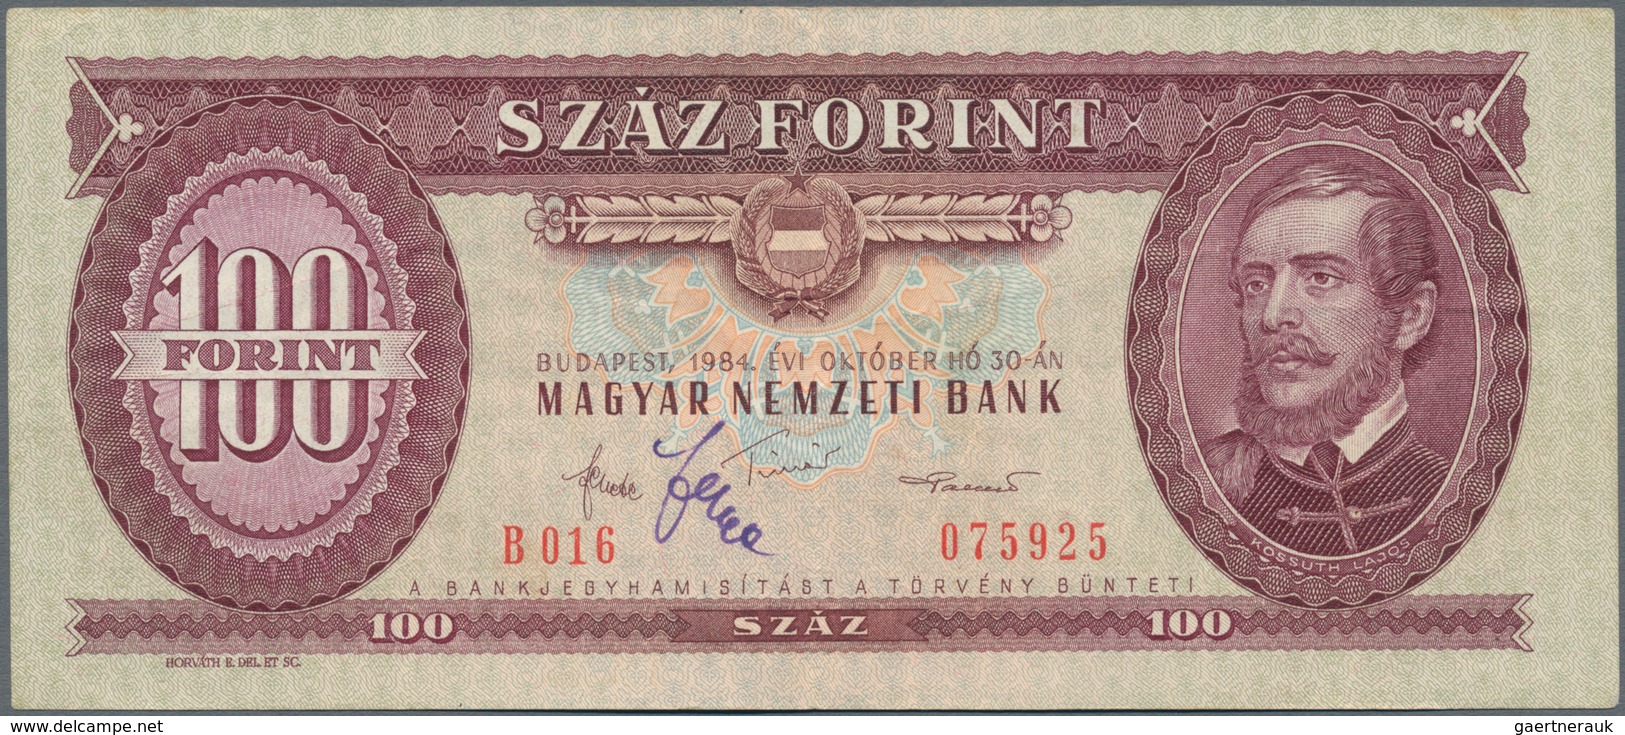 Hungary / Ungarn: Magyar Nemzeti Bank, Nice Lot With 4 Banknotes, 2x 50 Forint 1986 And 2x 100 Forin - Hongrie